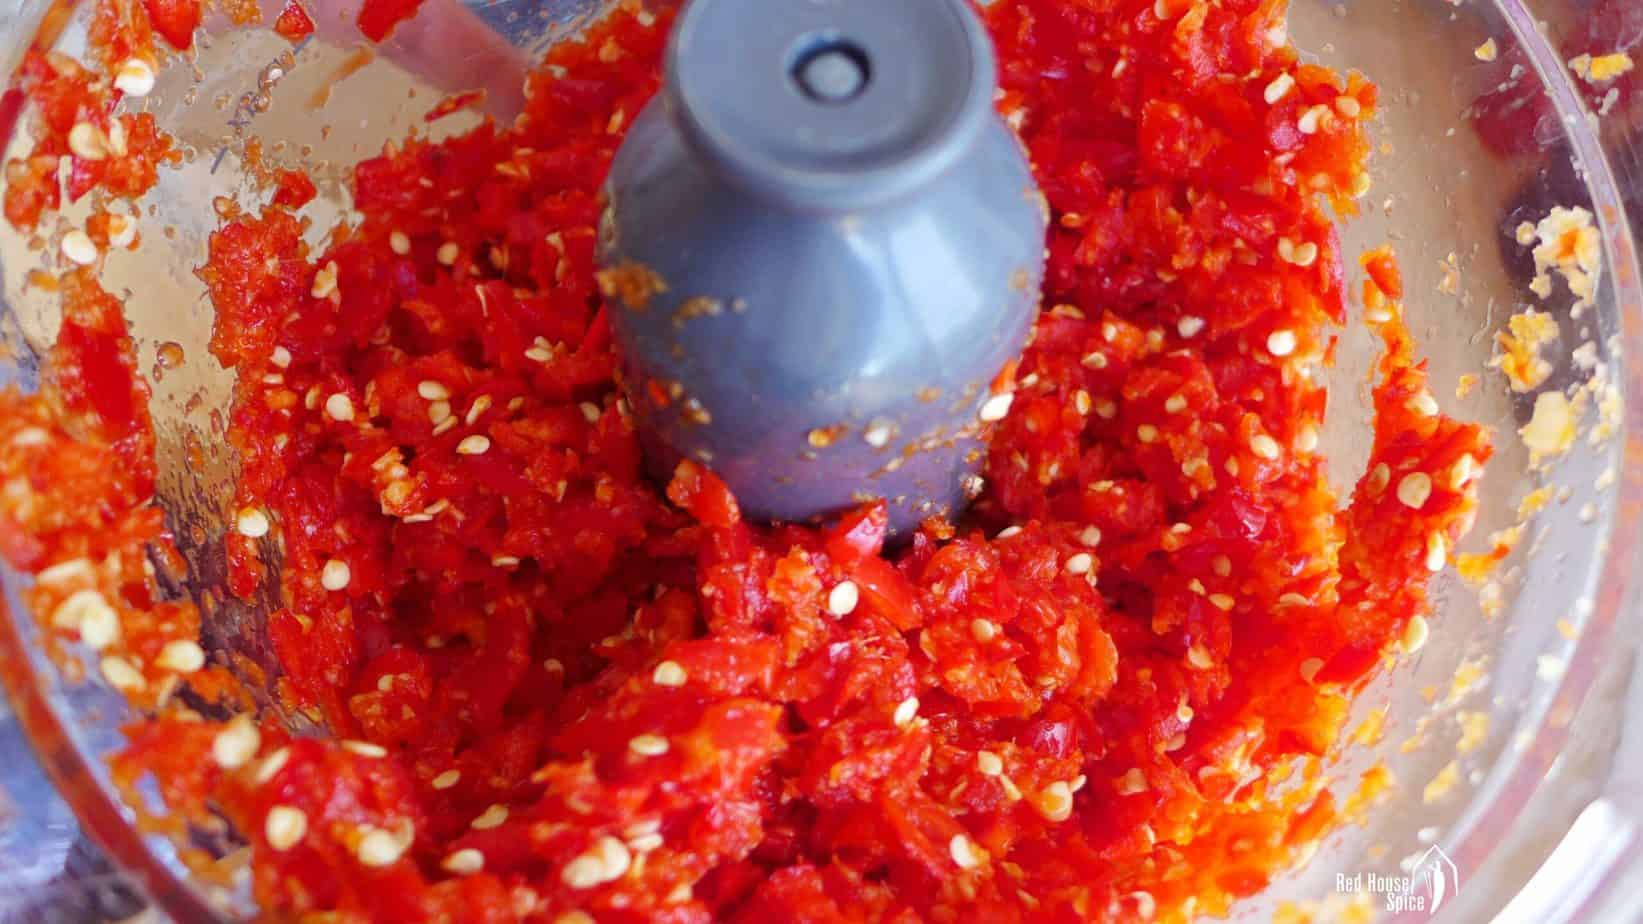 Blending chili pepper in a food processor